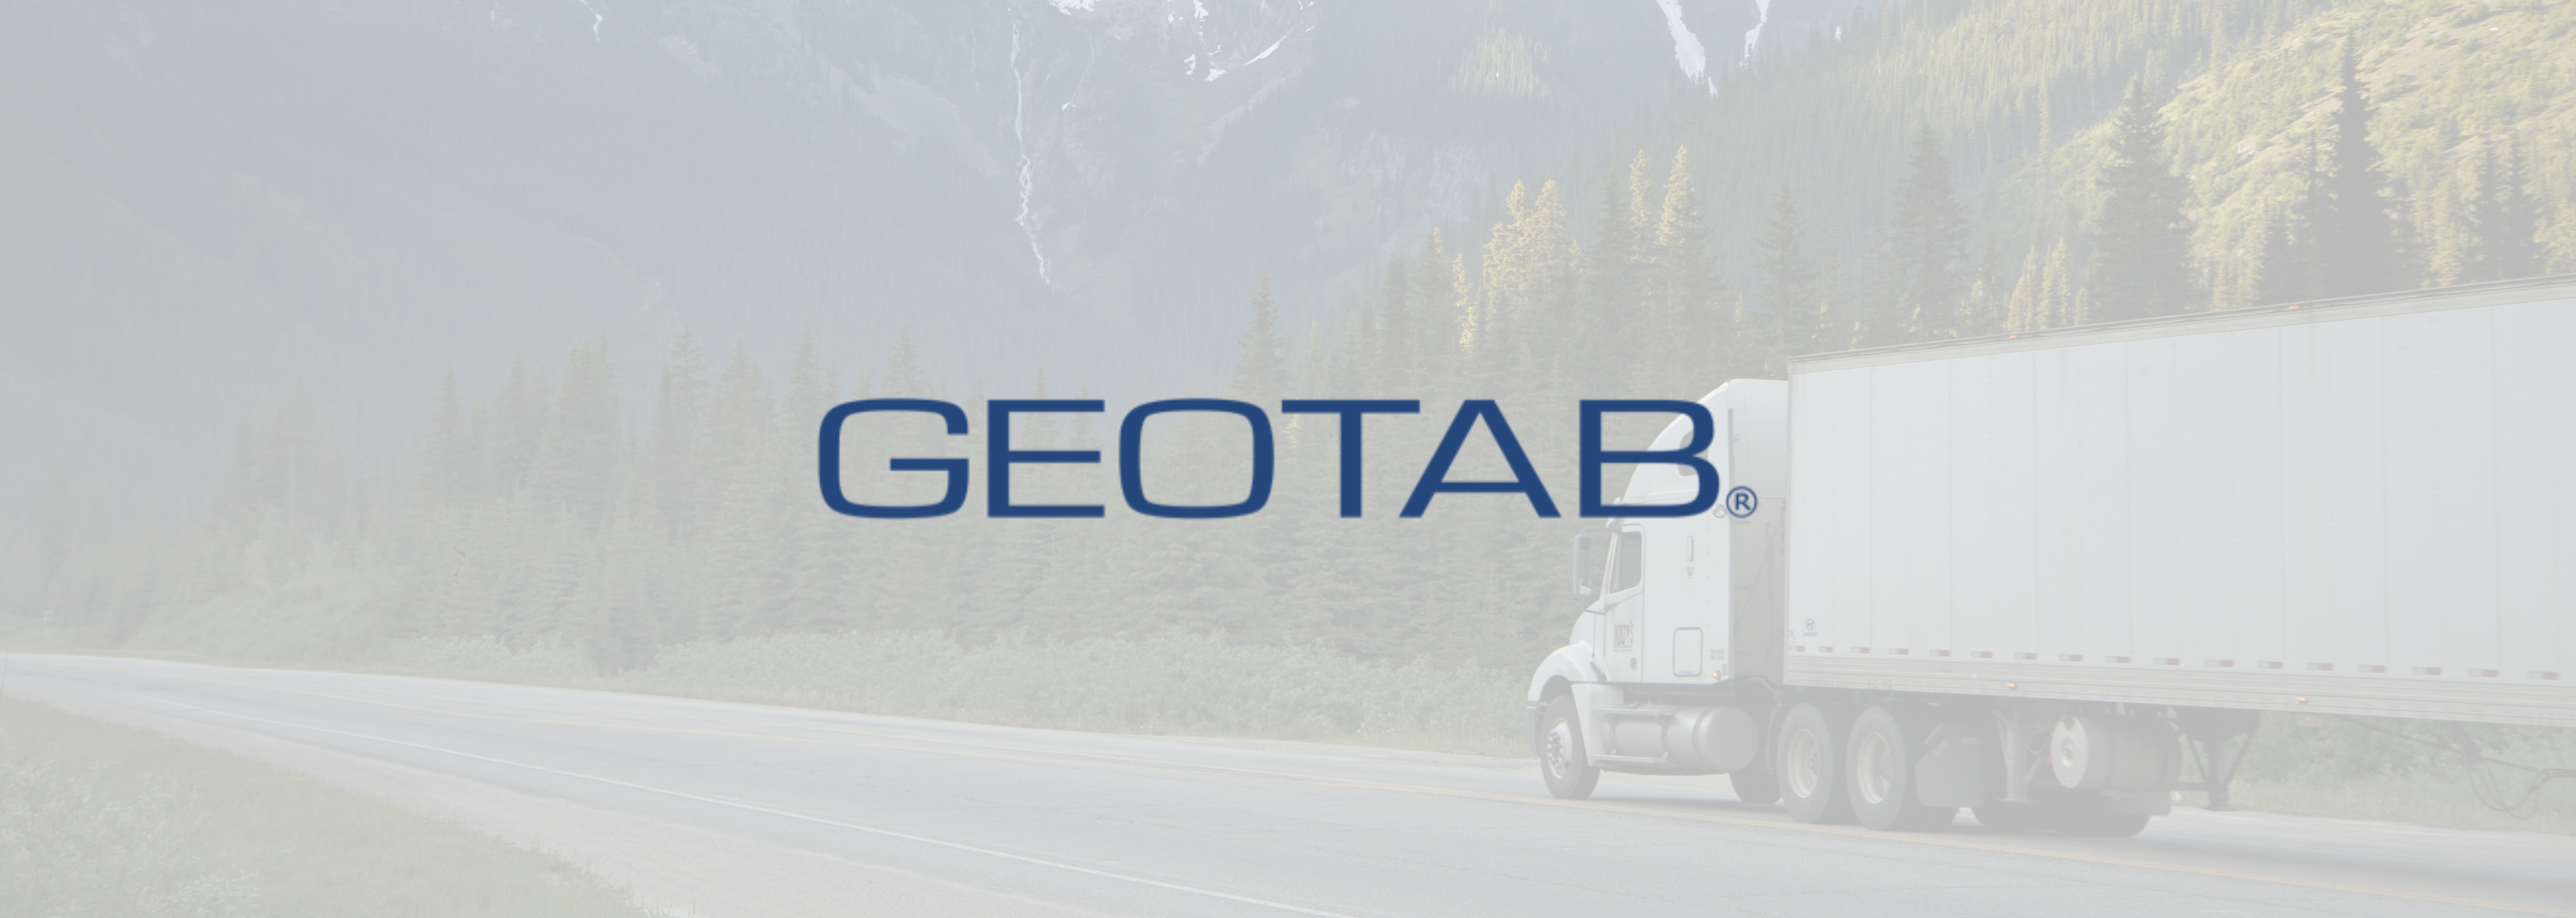 Geotab logo, semi truck on mountain road